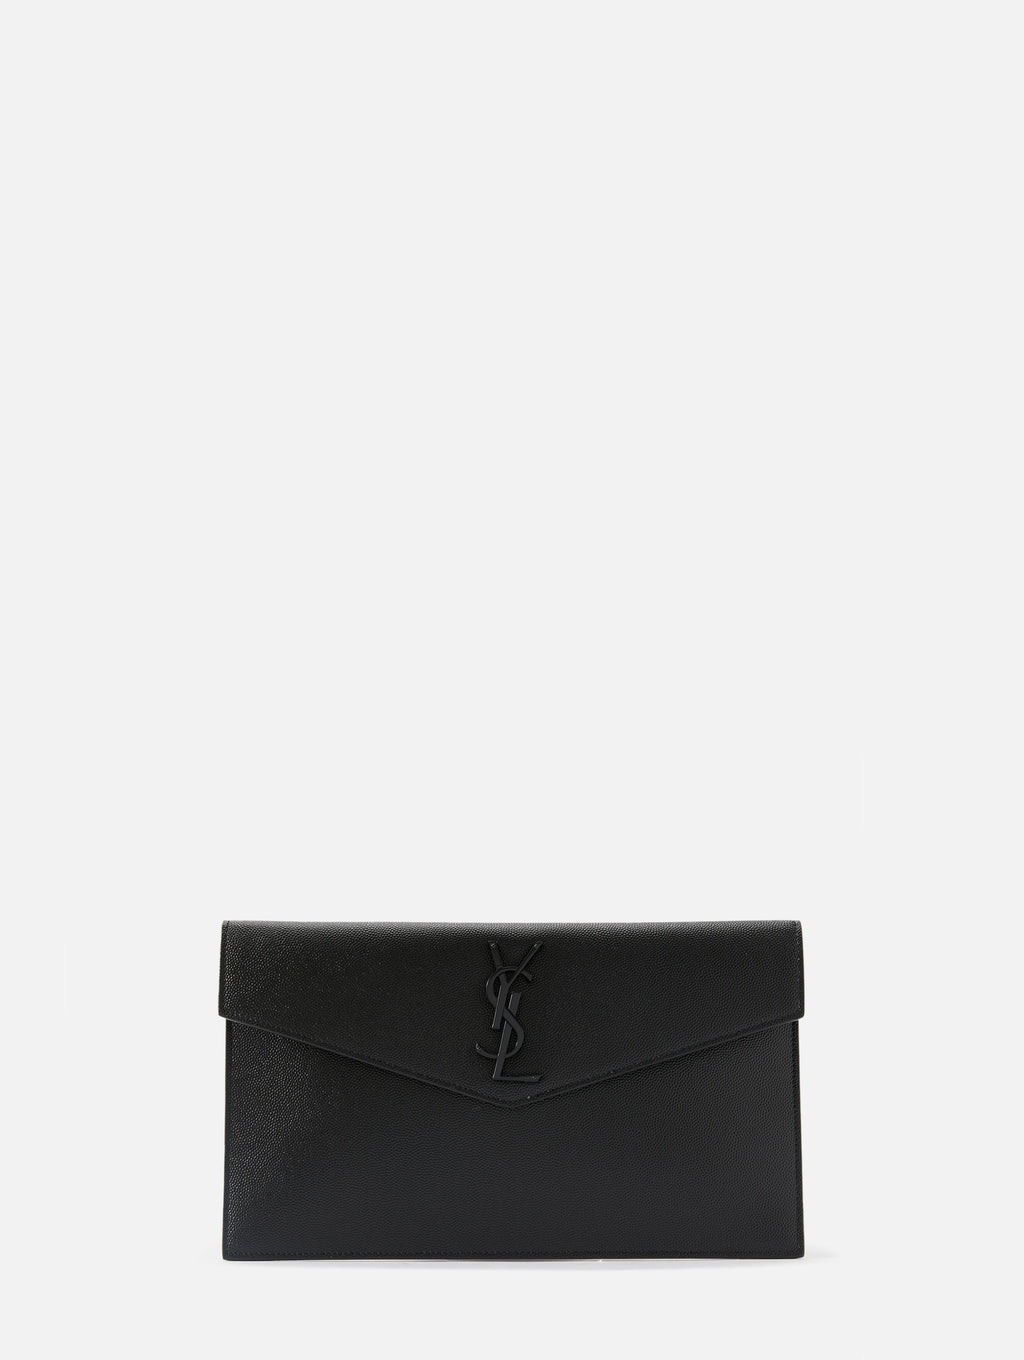 Yves Saint Laurent, Bags, Ysl Uptown Clutch Brand New